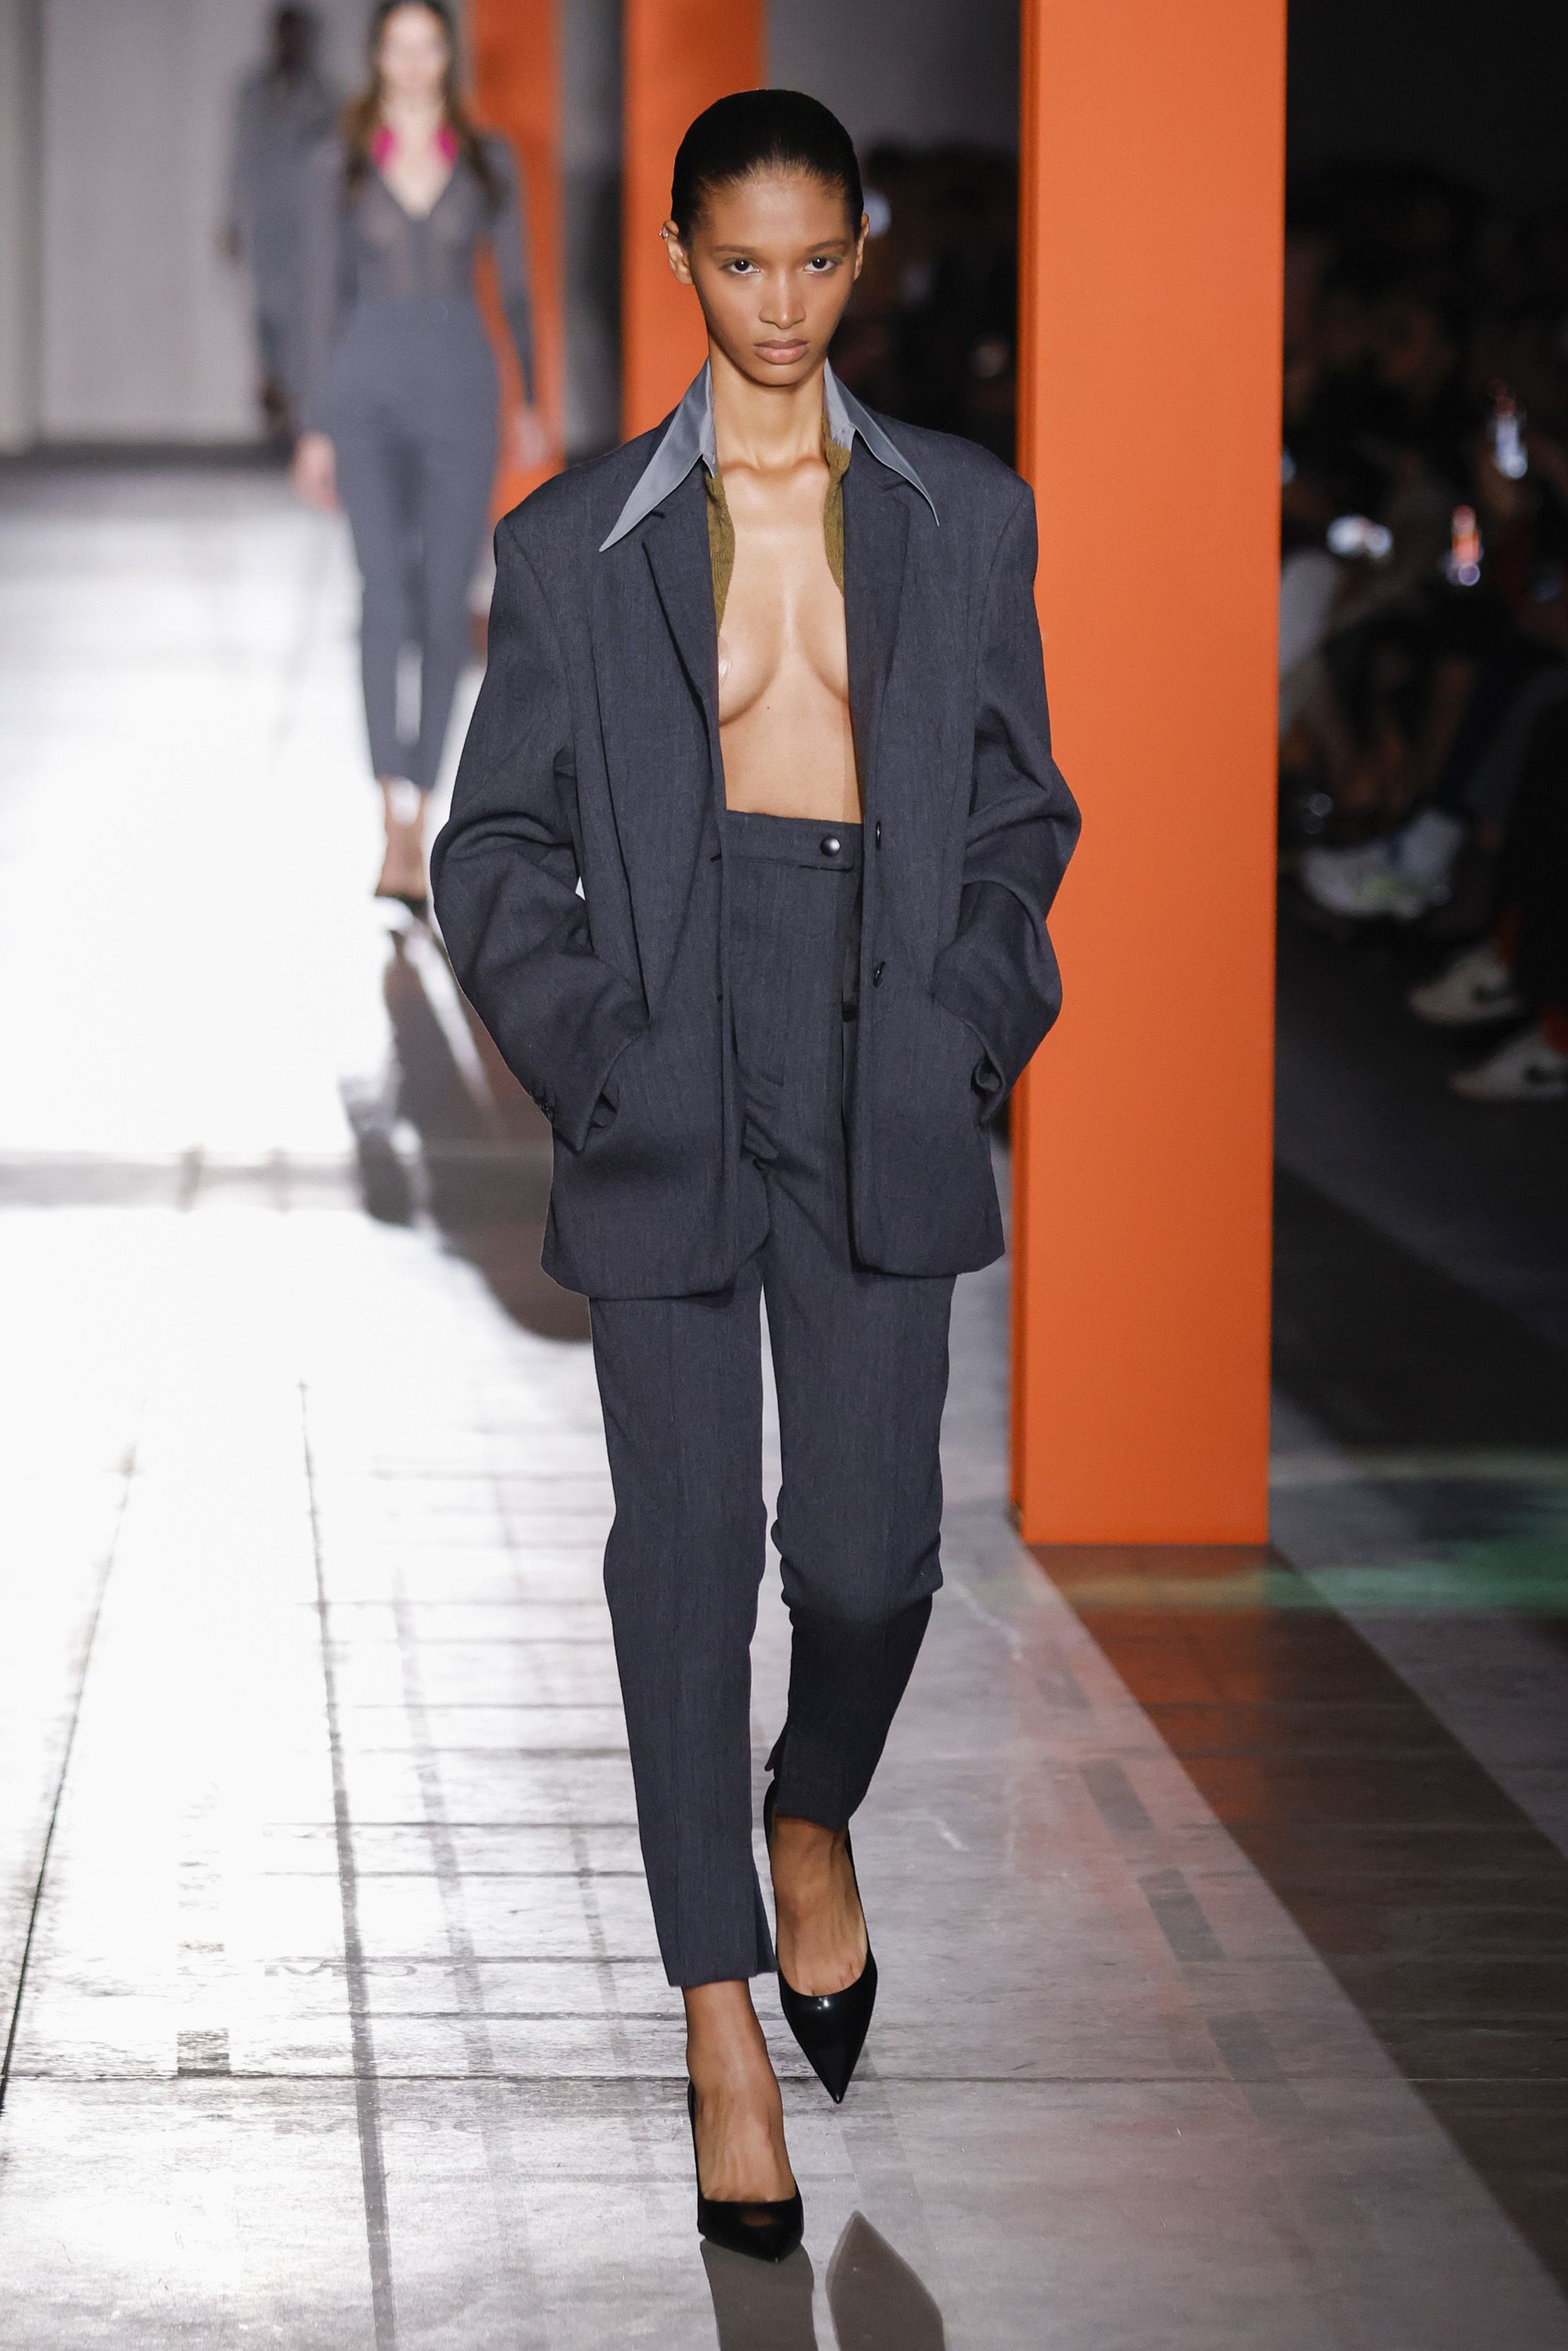 Milan Fashion Week 2023: All the Celeb Looks From the Menswear Runways